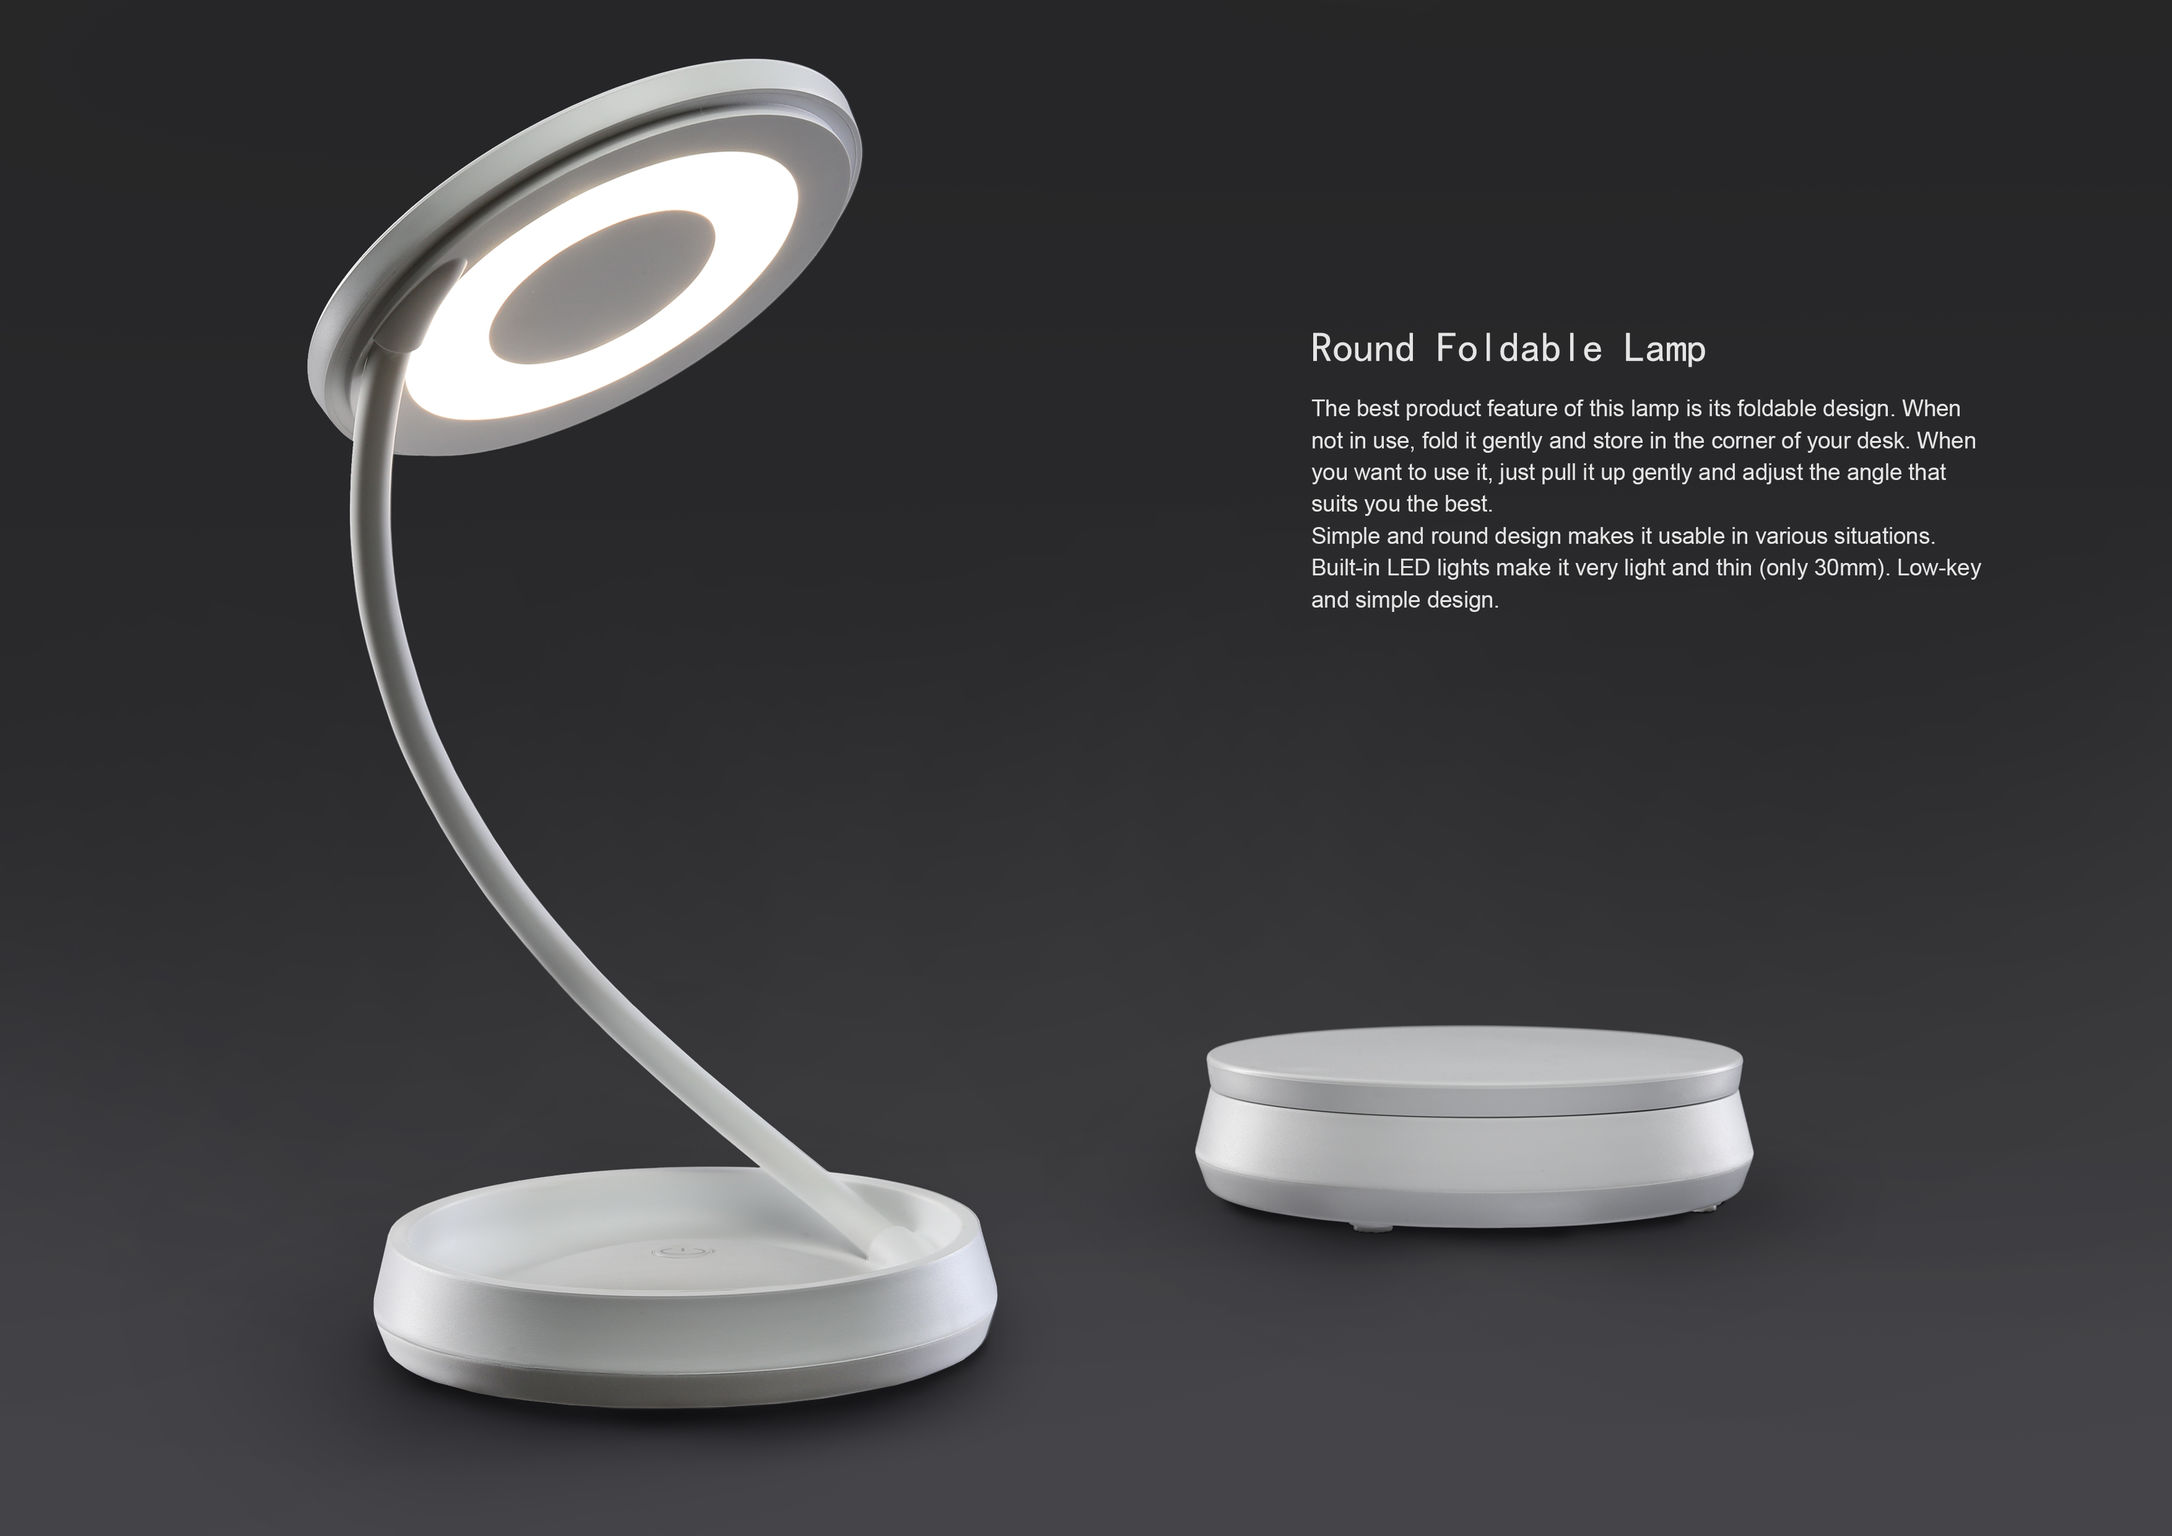 Round Foldable Lamp